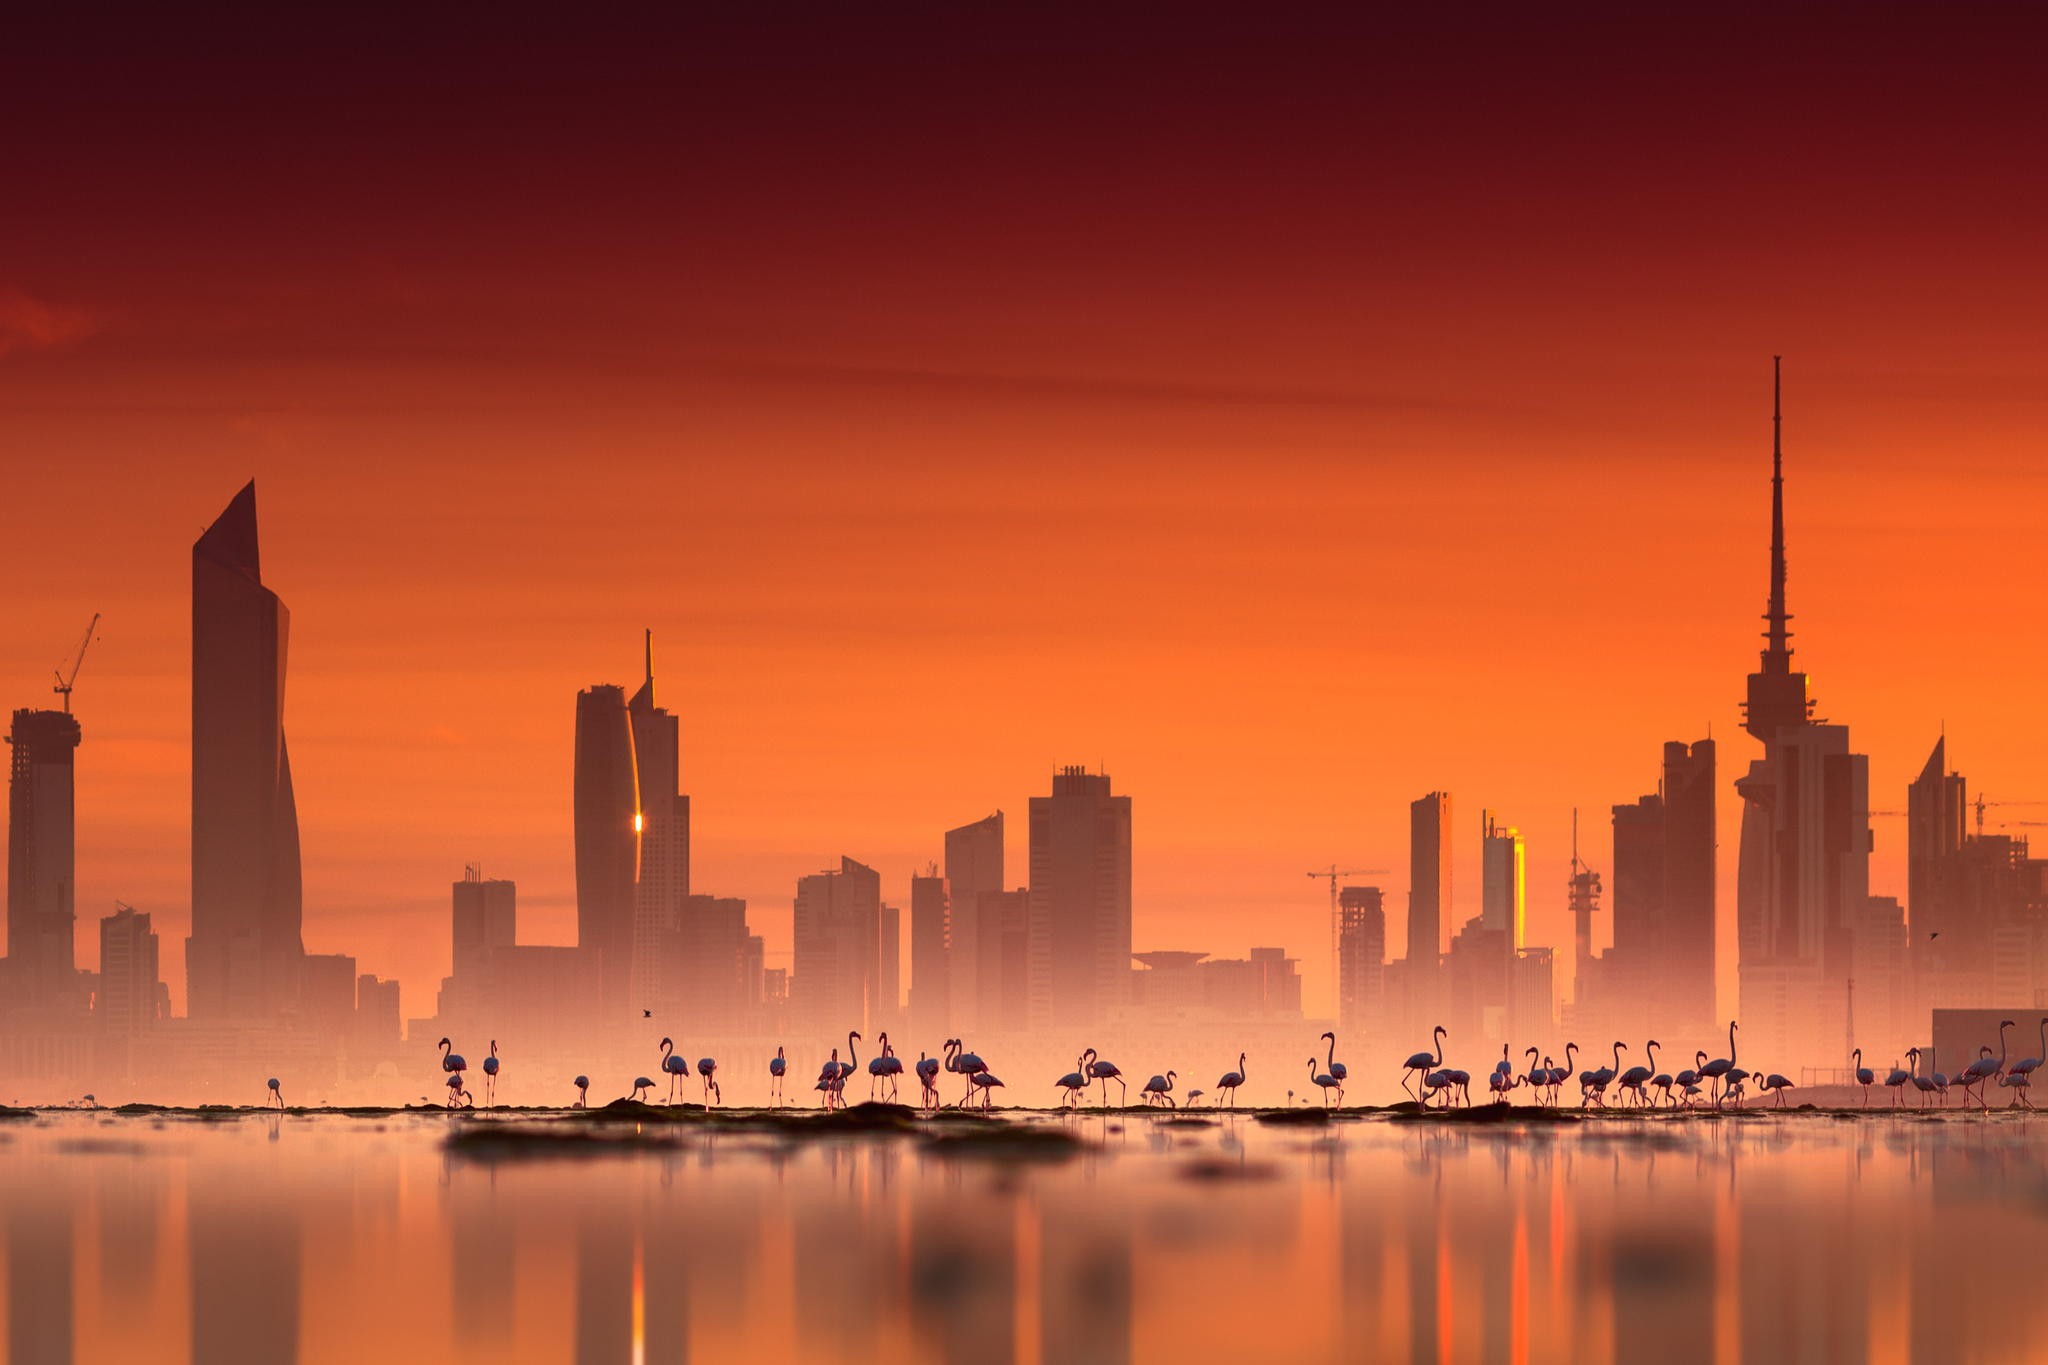 General 2048x1365 photography water architecture building city cityscape flamingos skyscraper sunset orange sky sky animals birds